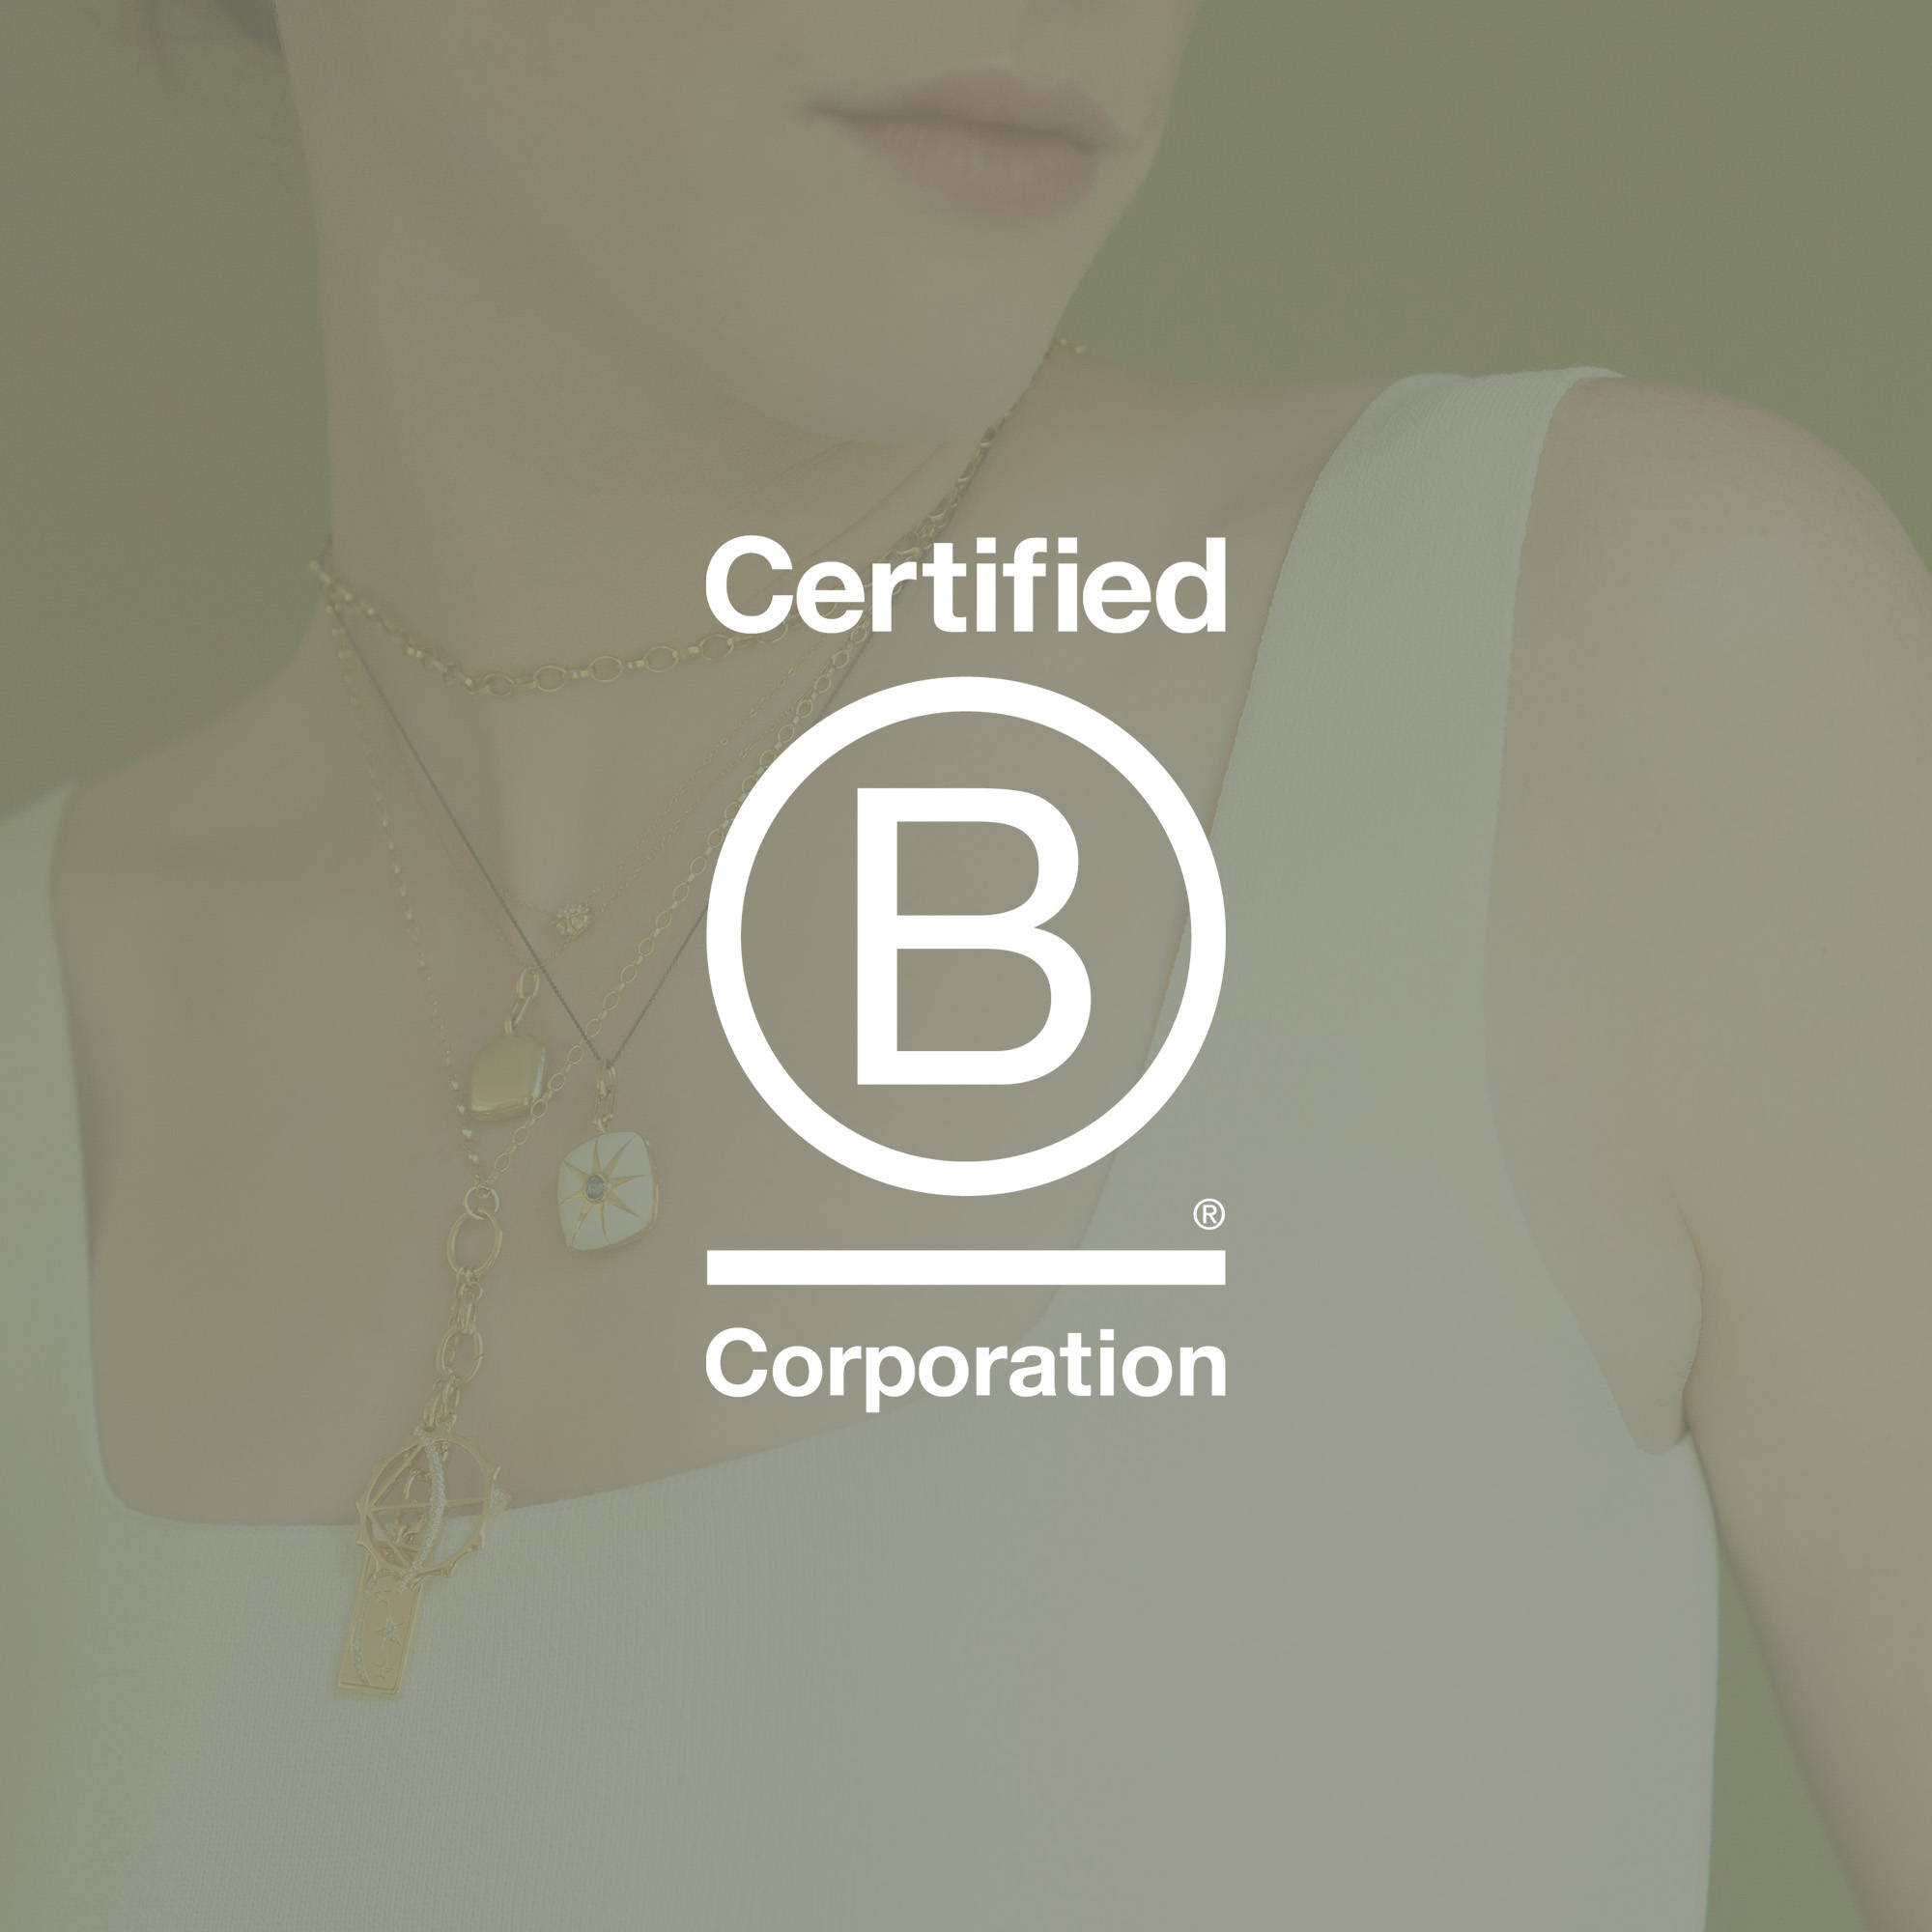 Certified B Corporation®